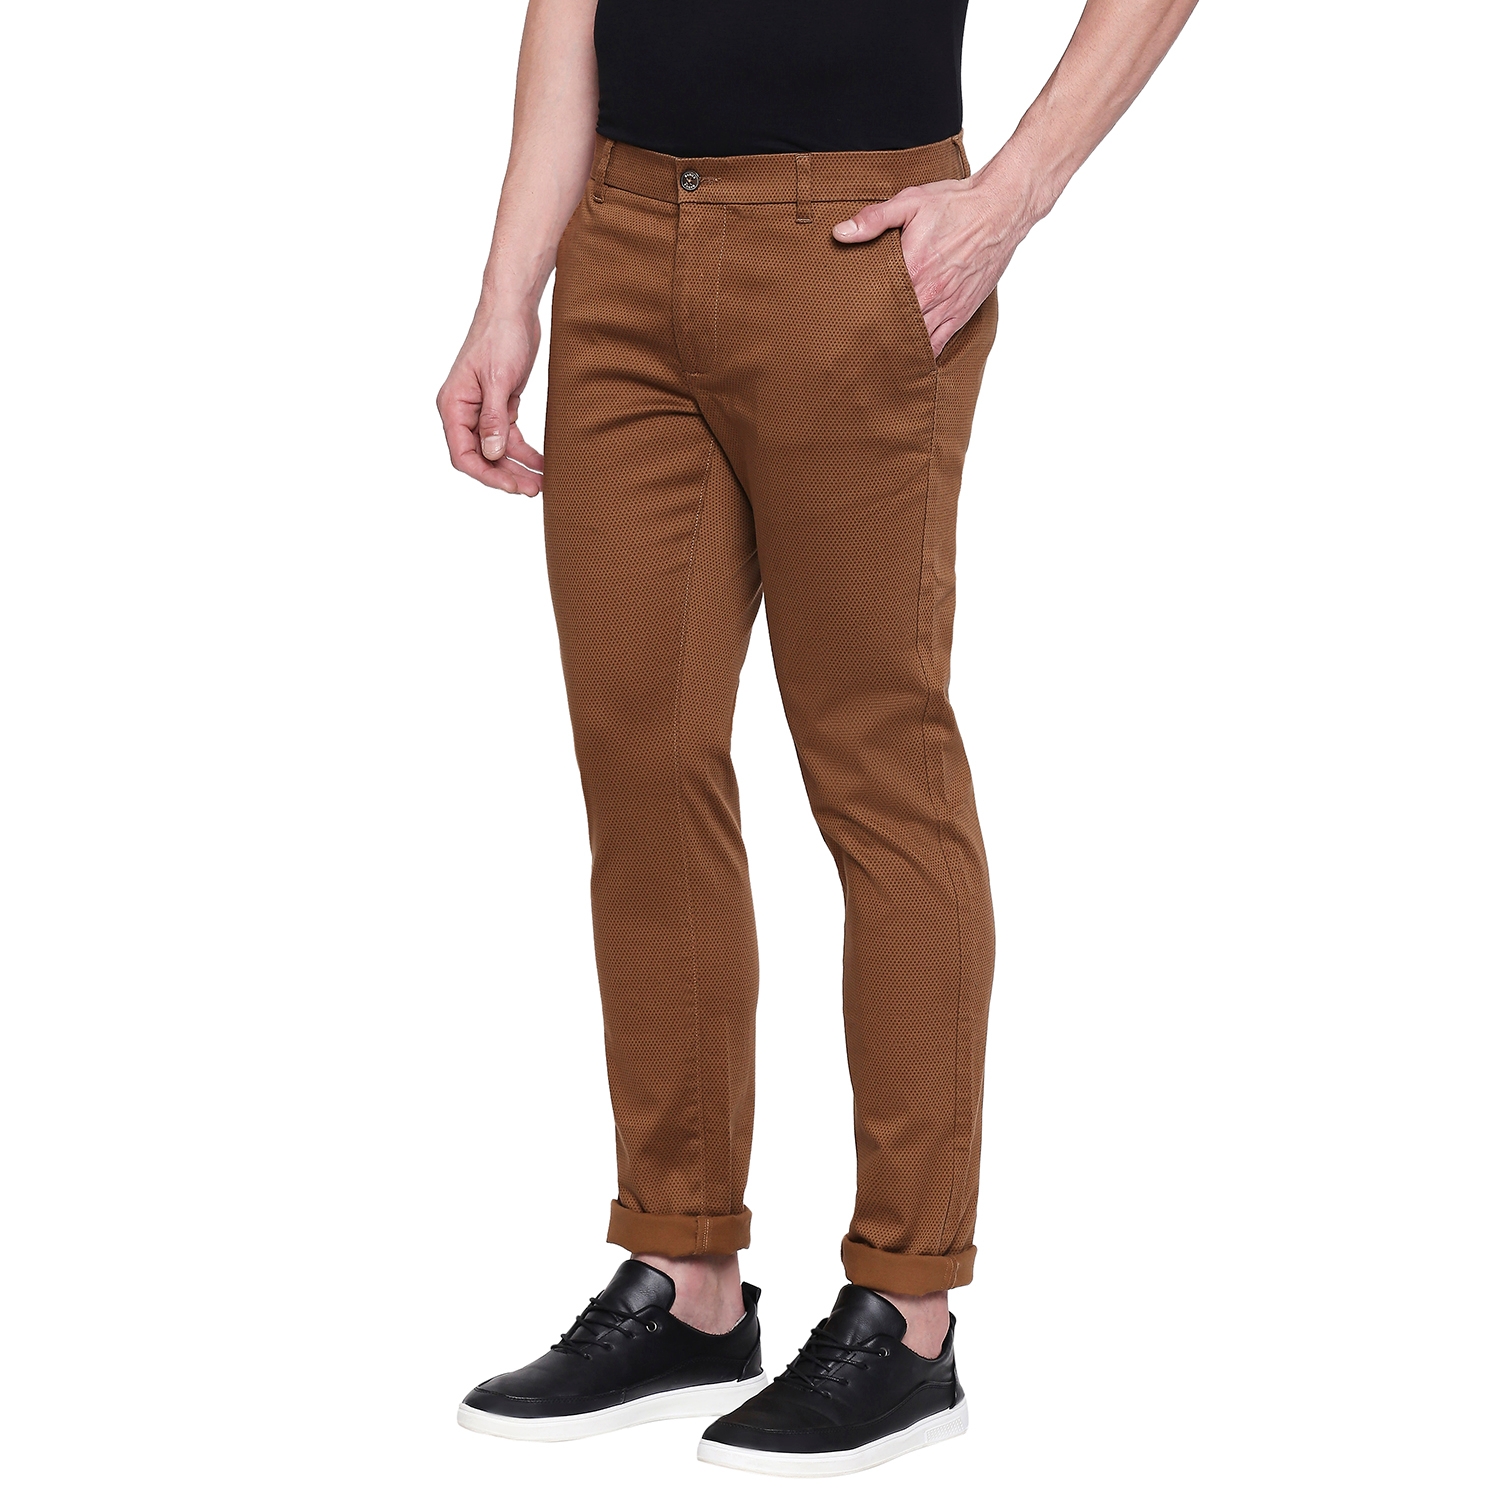 Basics | Men's Khaki Cotton Blend Printed Trouser 2